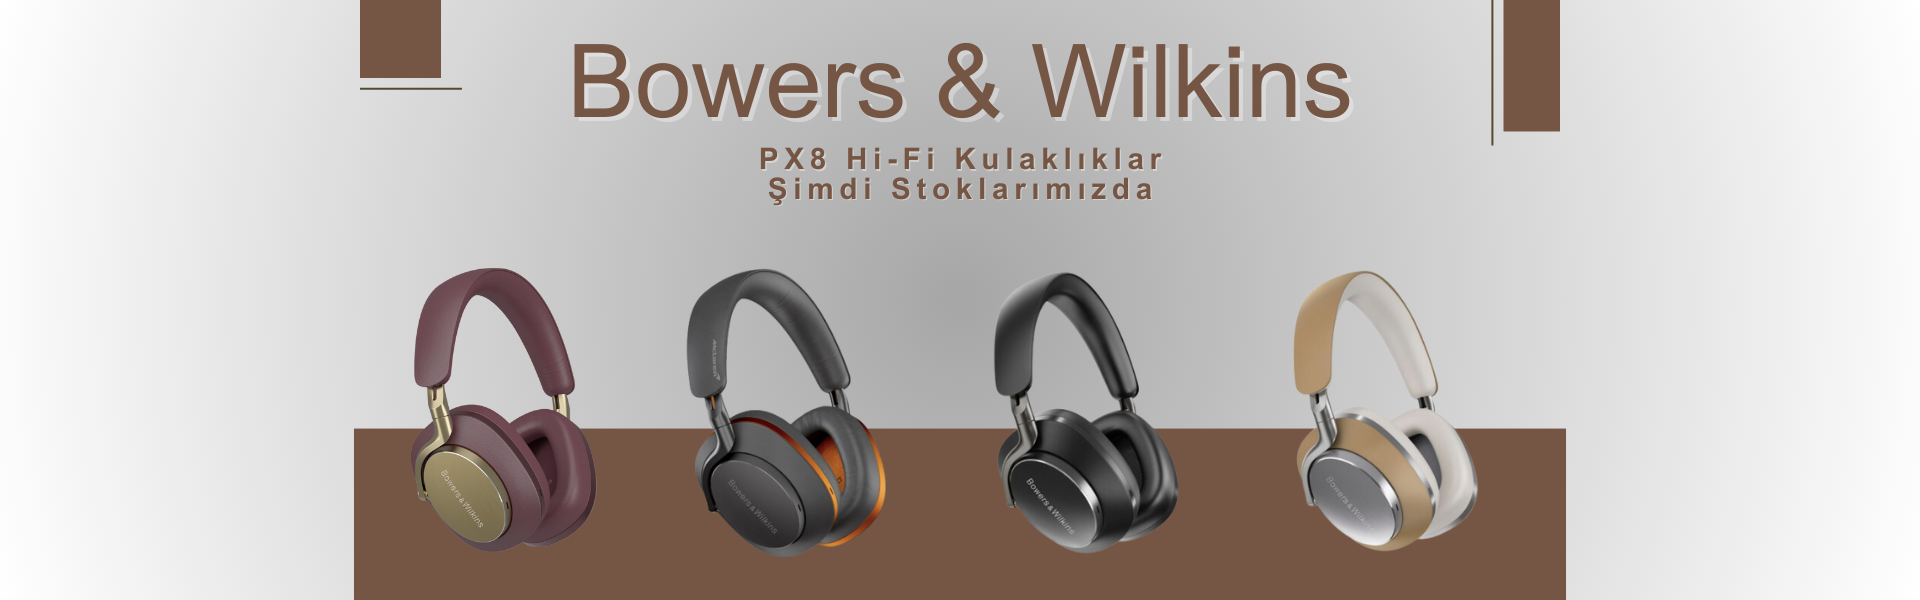 Bowers & Wilkins PX8 Kulaklıklar